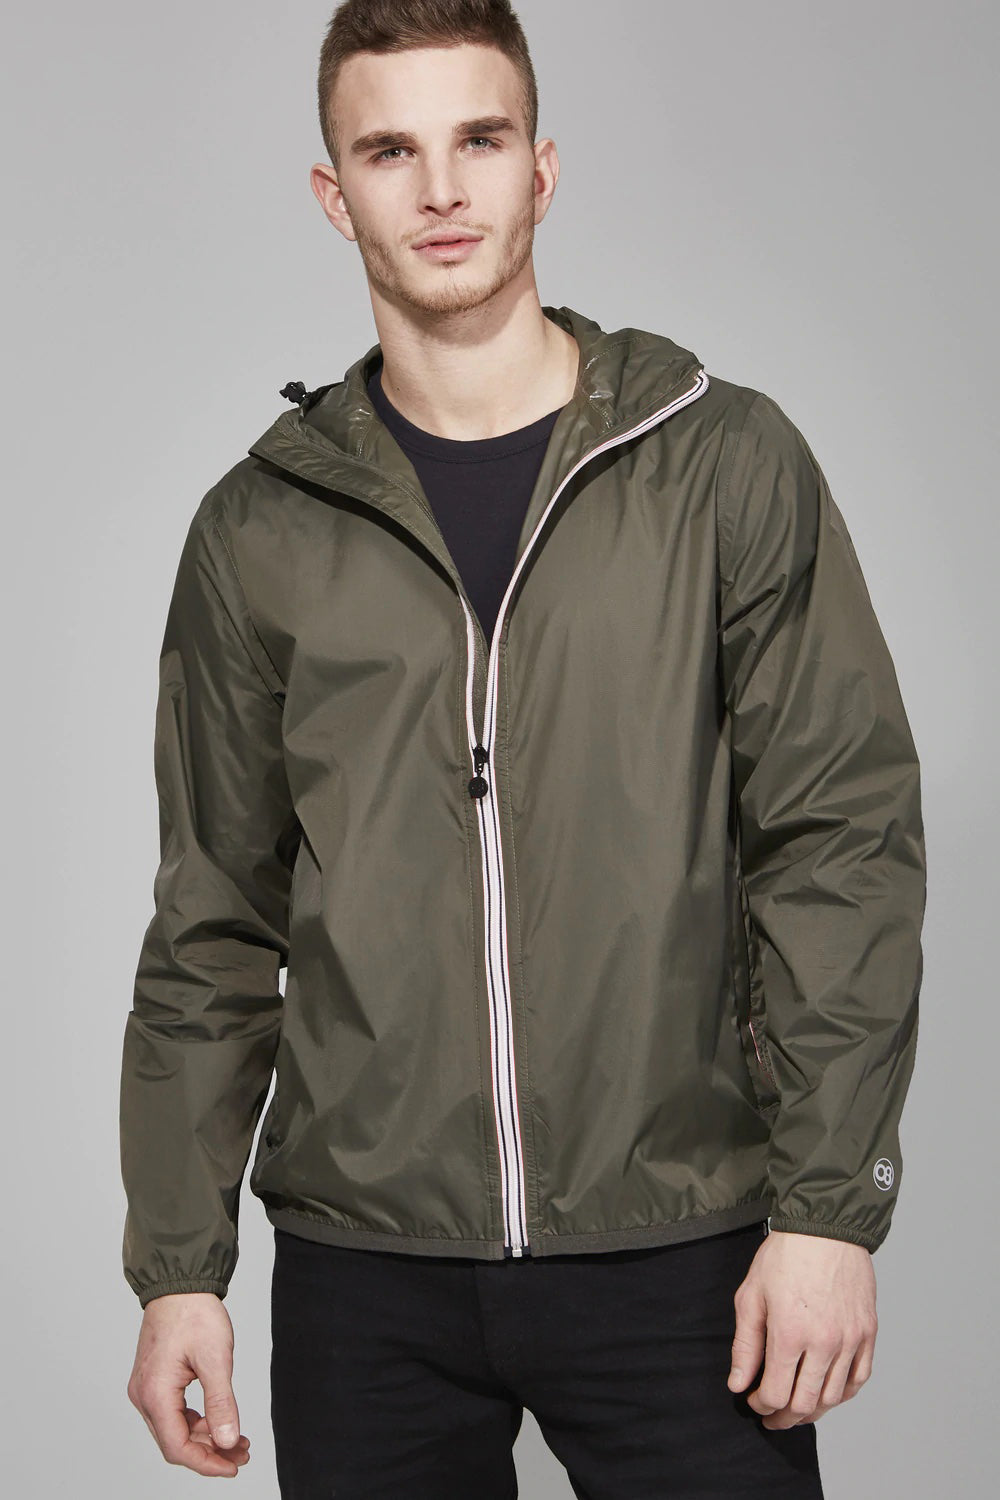 Torba full zip packable rain jacket and windbreaker - O8Lifestyle